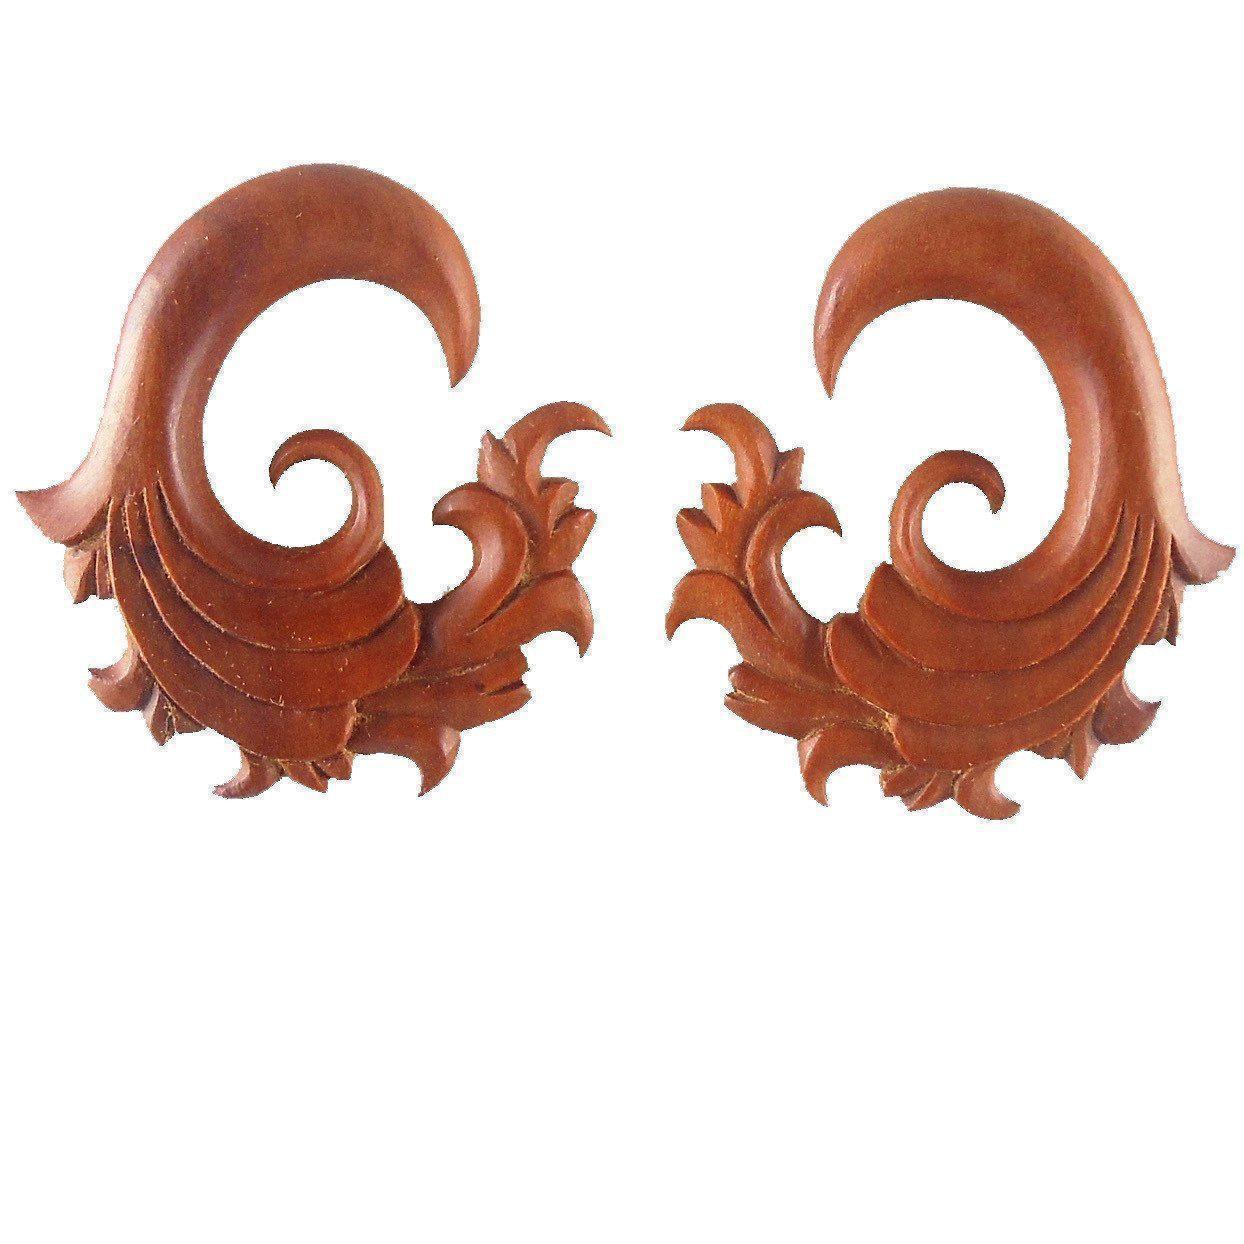 Gauge Earrings :|: Fire. Fruit Wood 00 gauge earrings, gauge earrings.